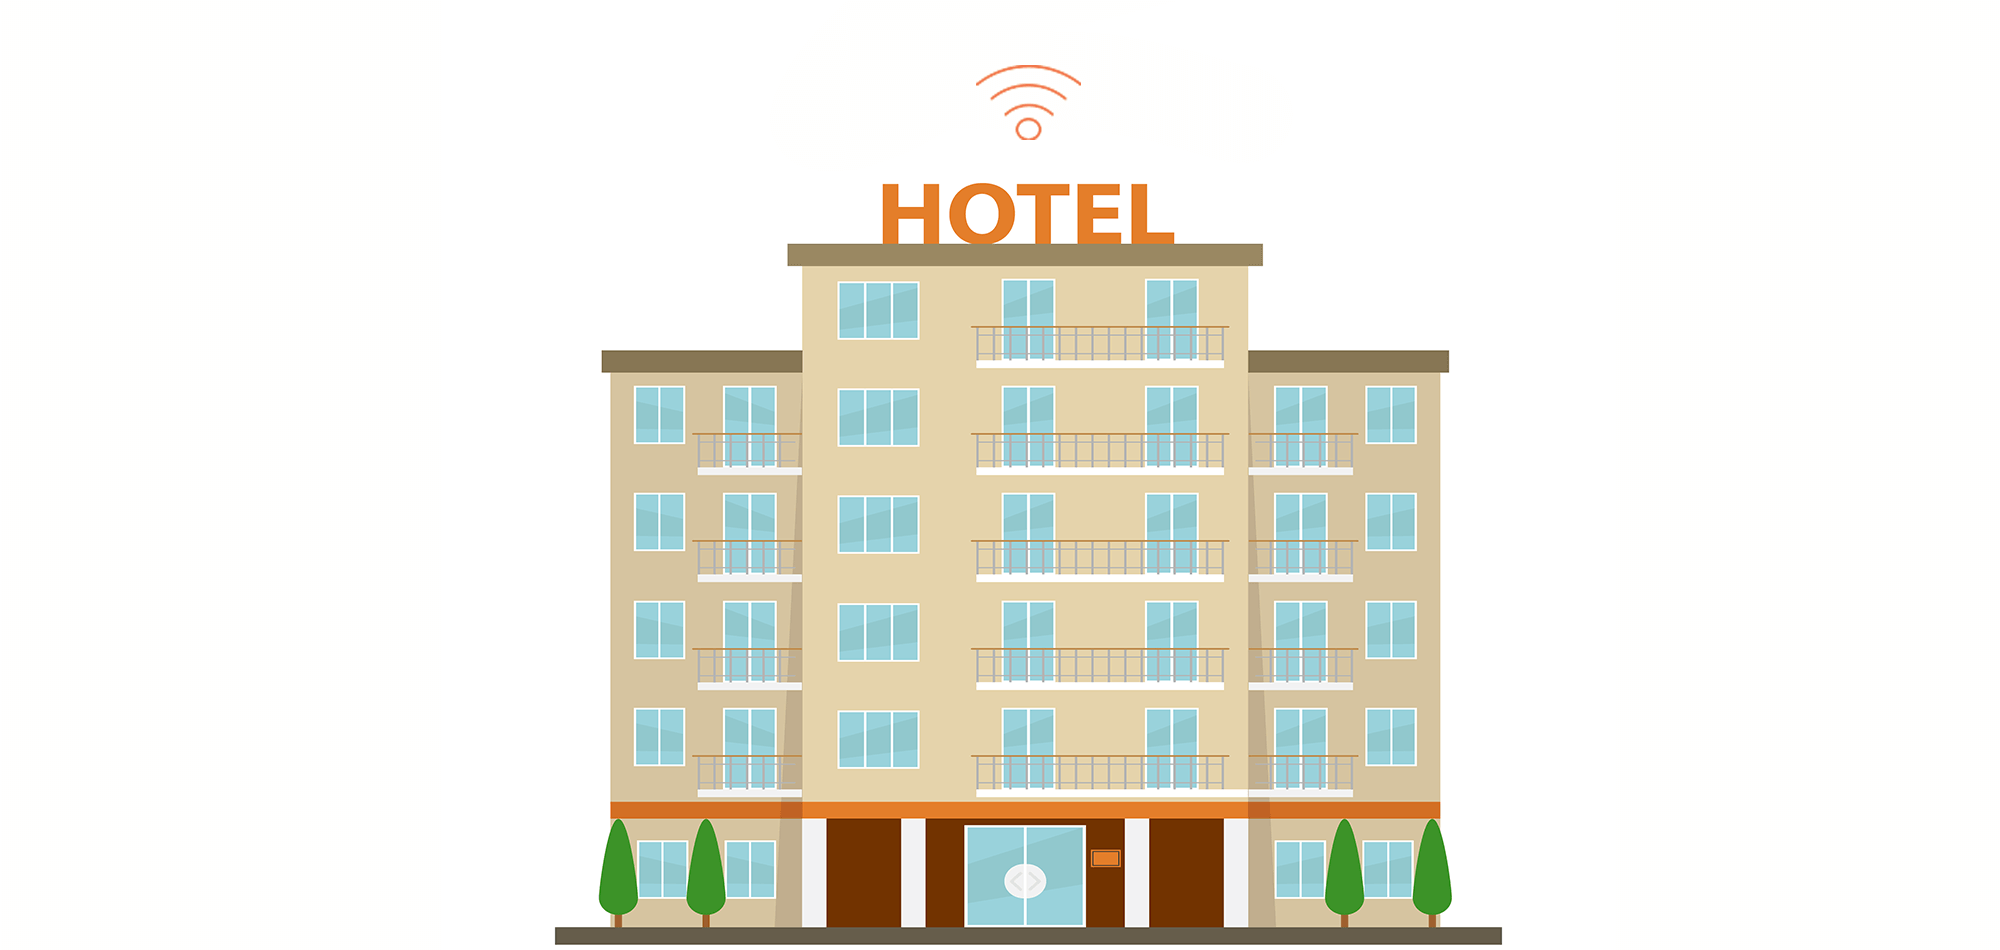 hotel wifi